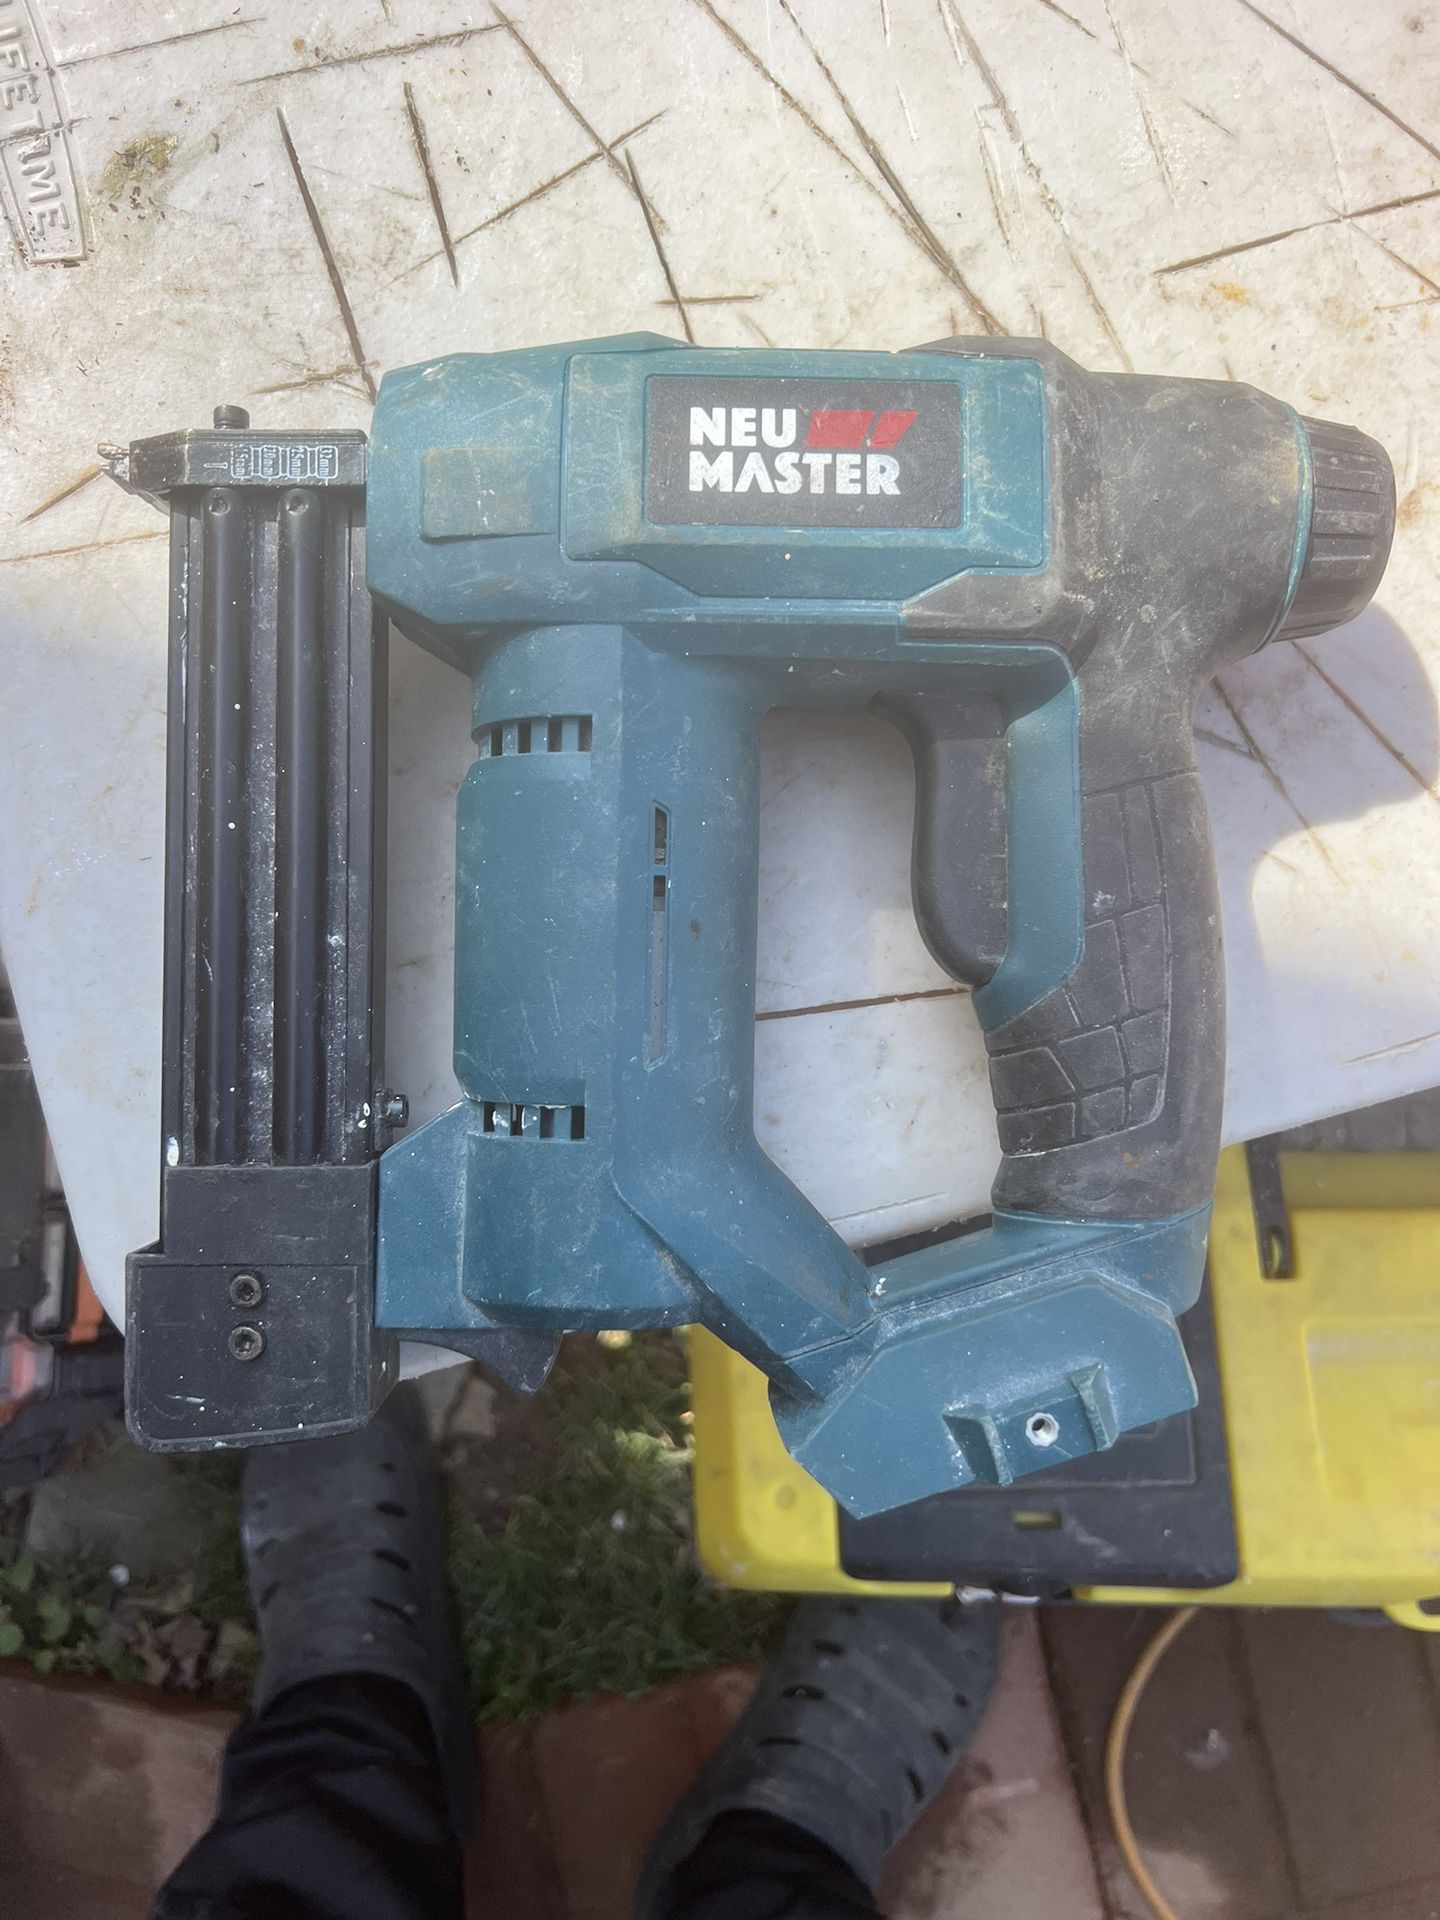 NEU MASTER Cordless Nail Gun Battery Nailer/Staple Gun (TOOL ONLY)